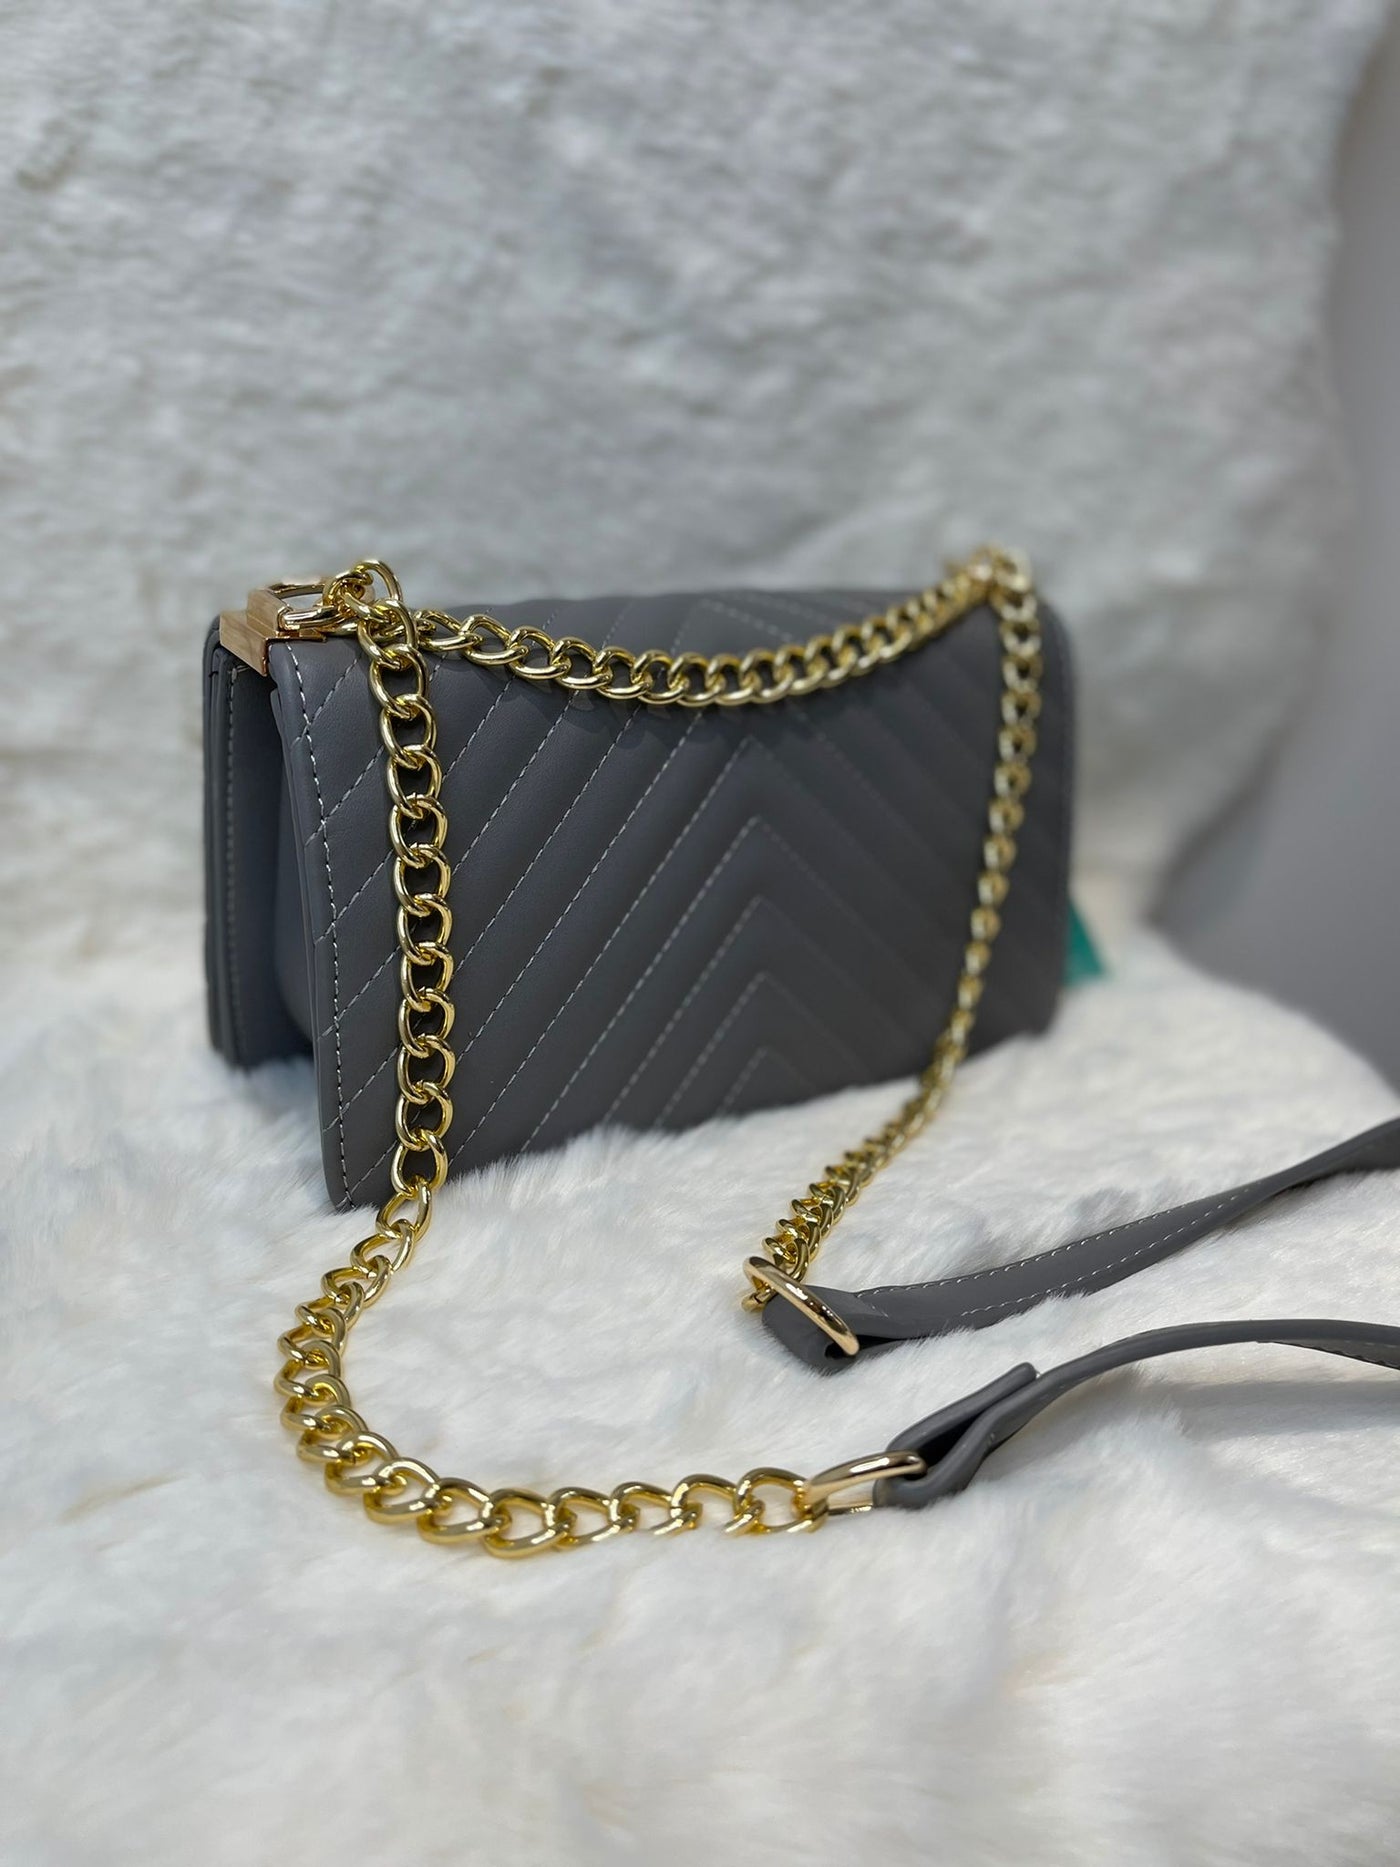 Grey stitch detail gold chain bag